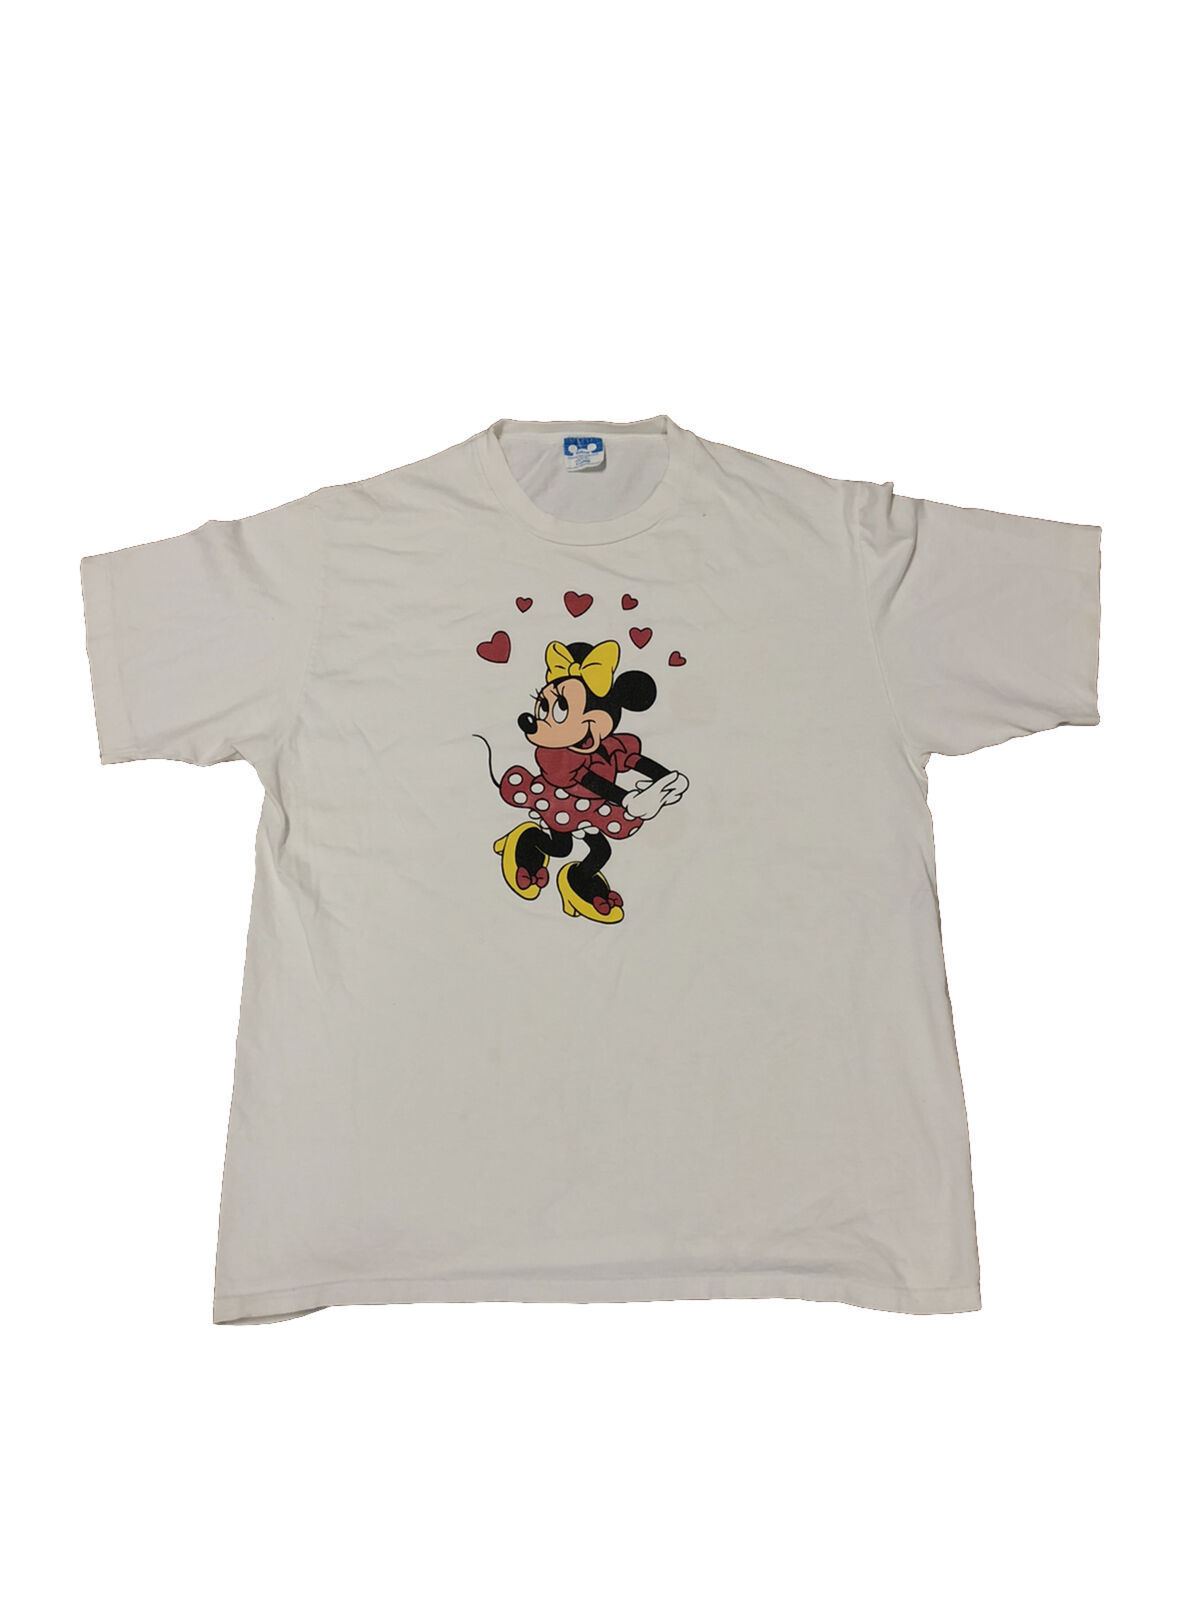 True Vintage 1980s Minnie Mouse Disney World T-Shirt XL